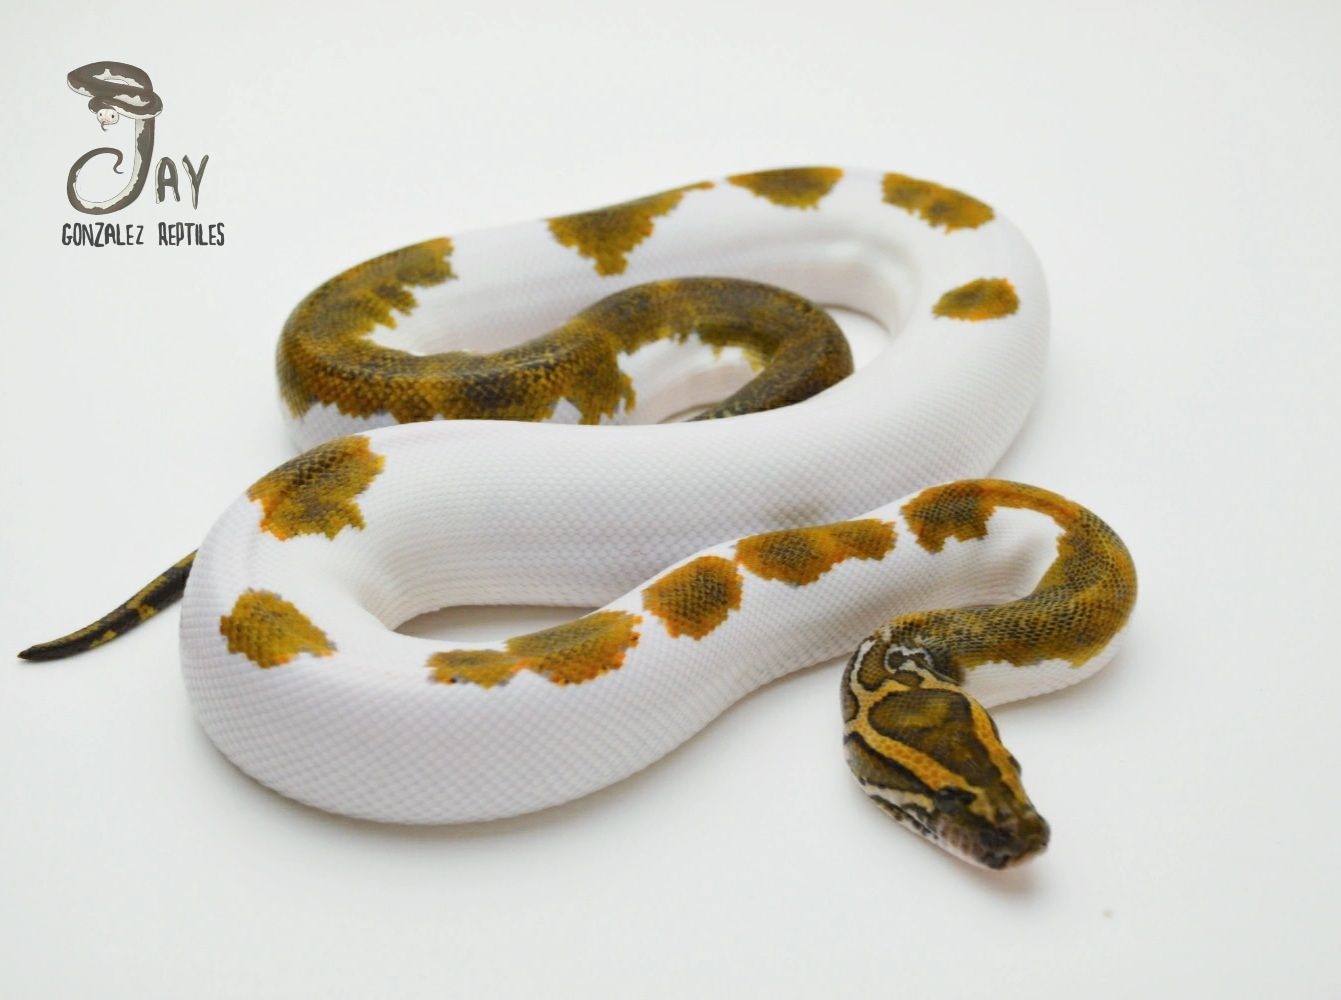 High White Pied Het Albino Burmese Python by Jay Gonzalez Reptiles